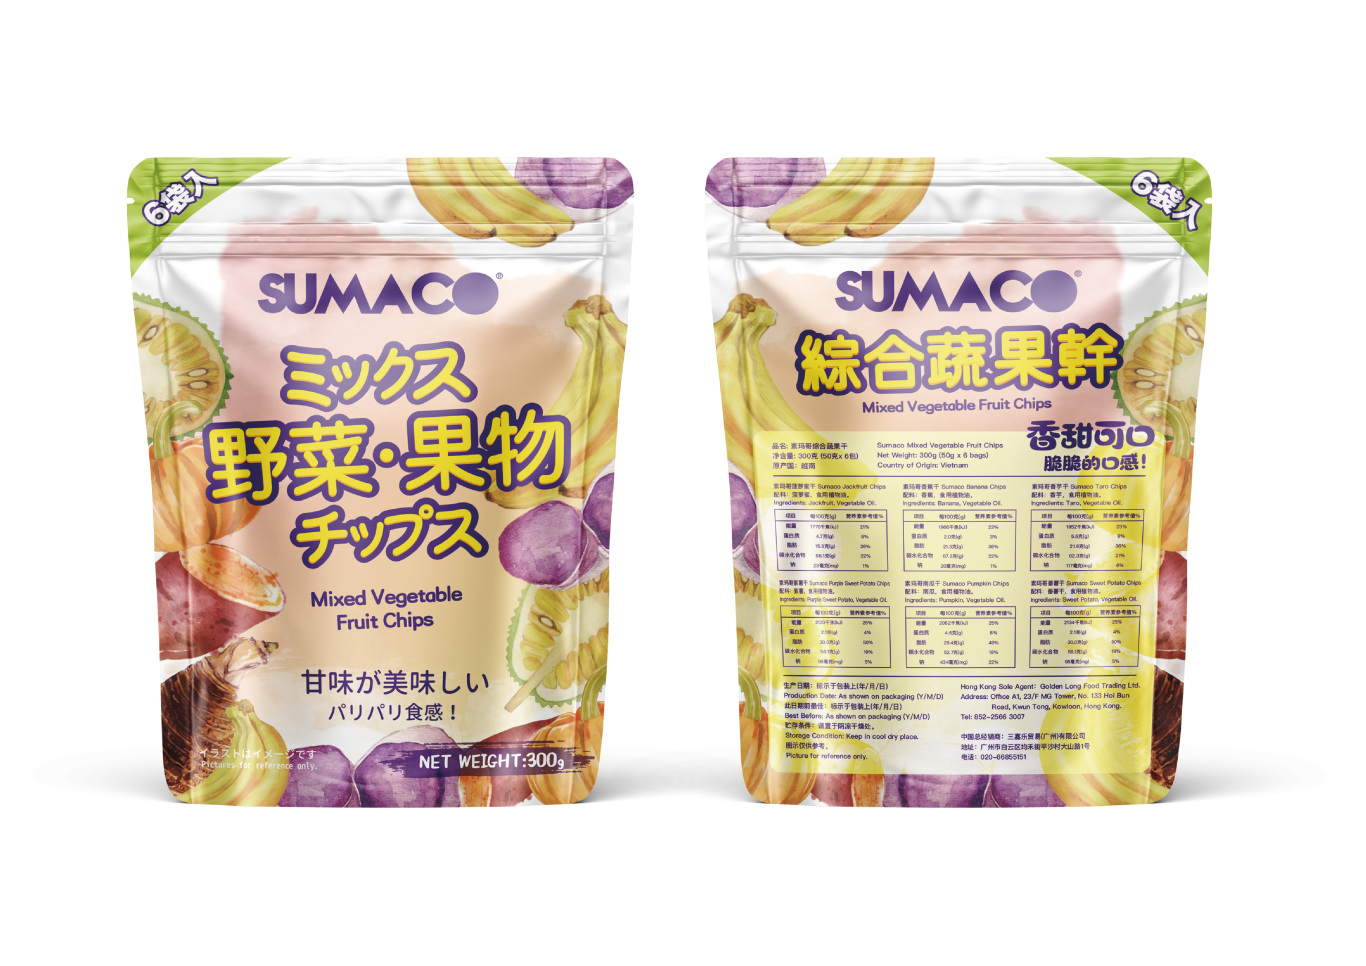 SUMACO素玛哥综合蔬果干零食产品包装设计图0